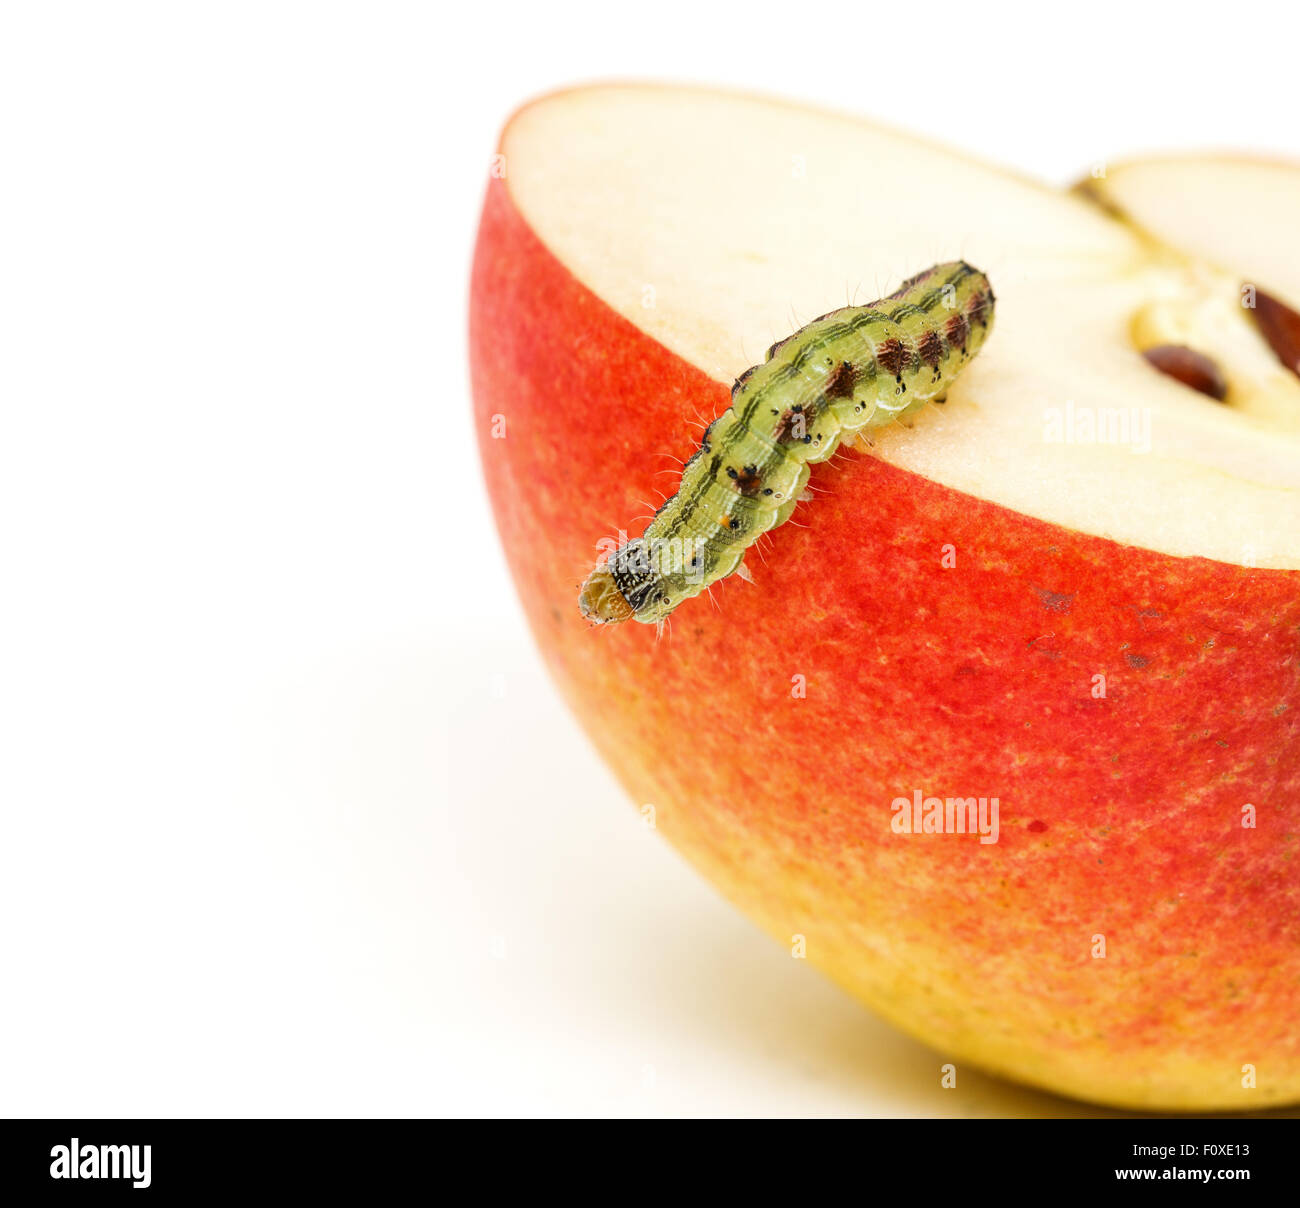 Caterpillar verde si insinua su Red Apple, sfondo bianco Foto Stock